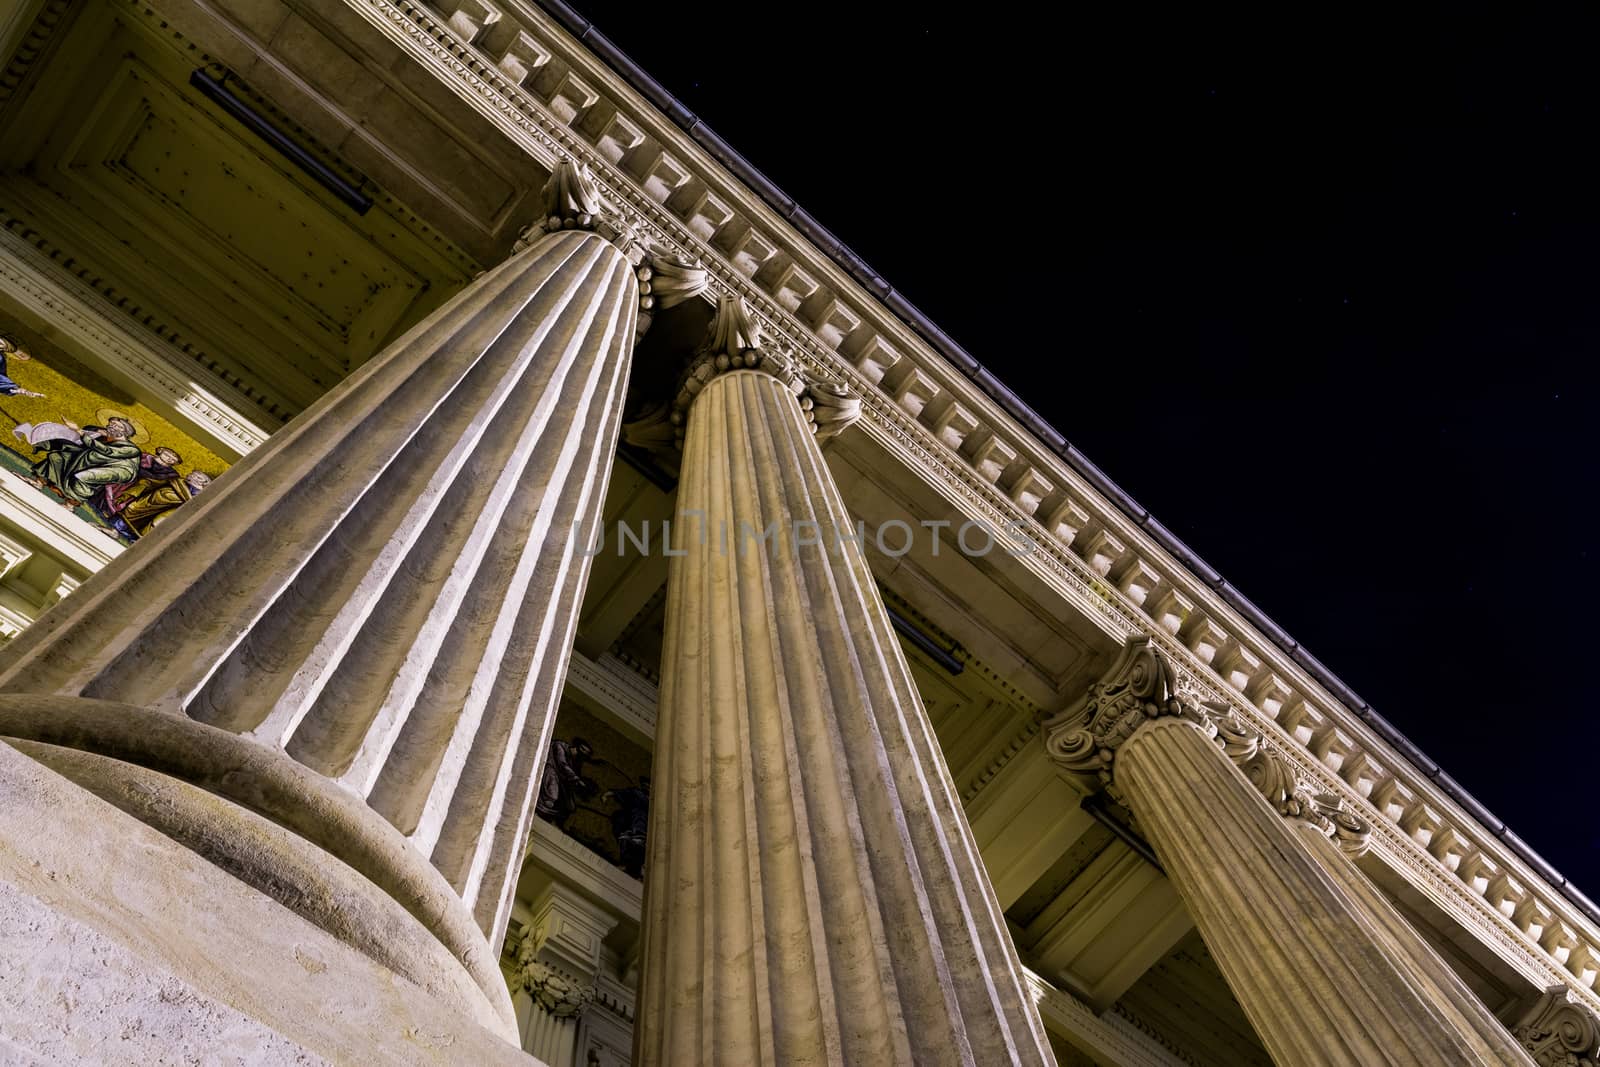 Columns, pillars of historic building.